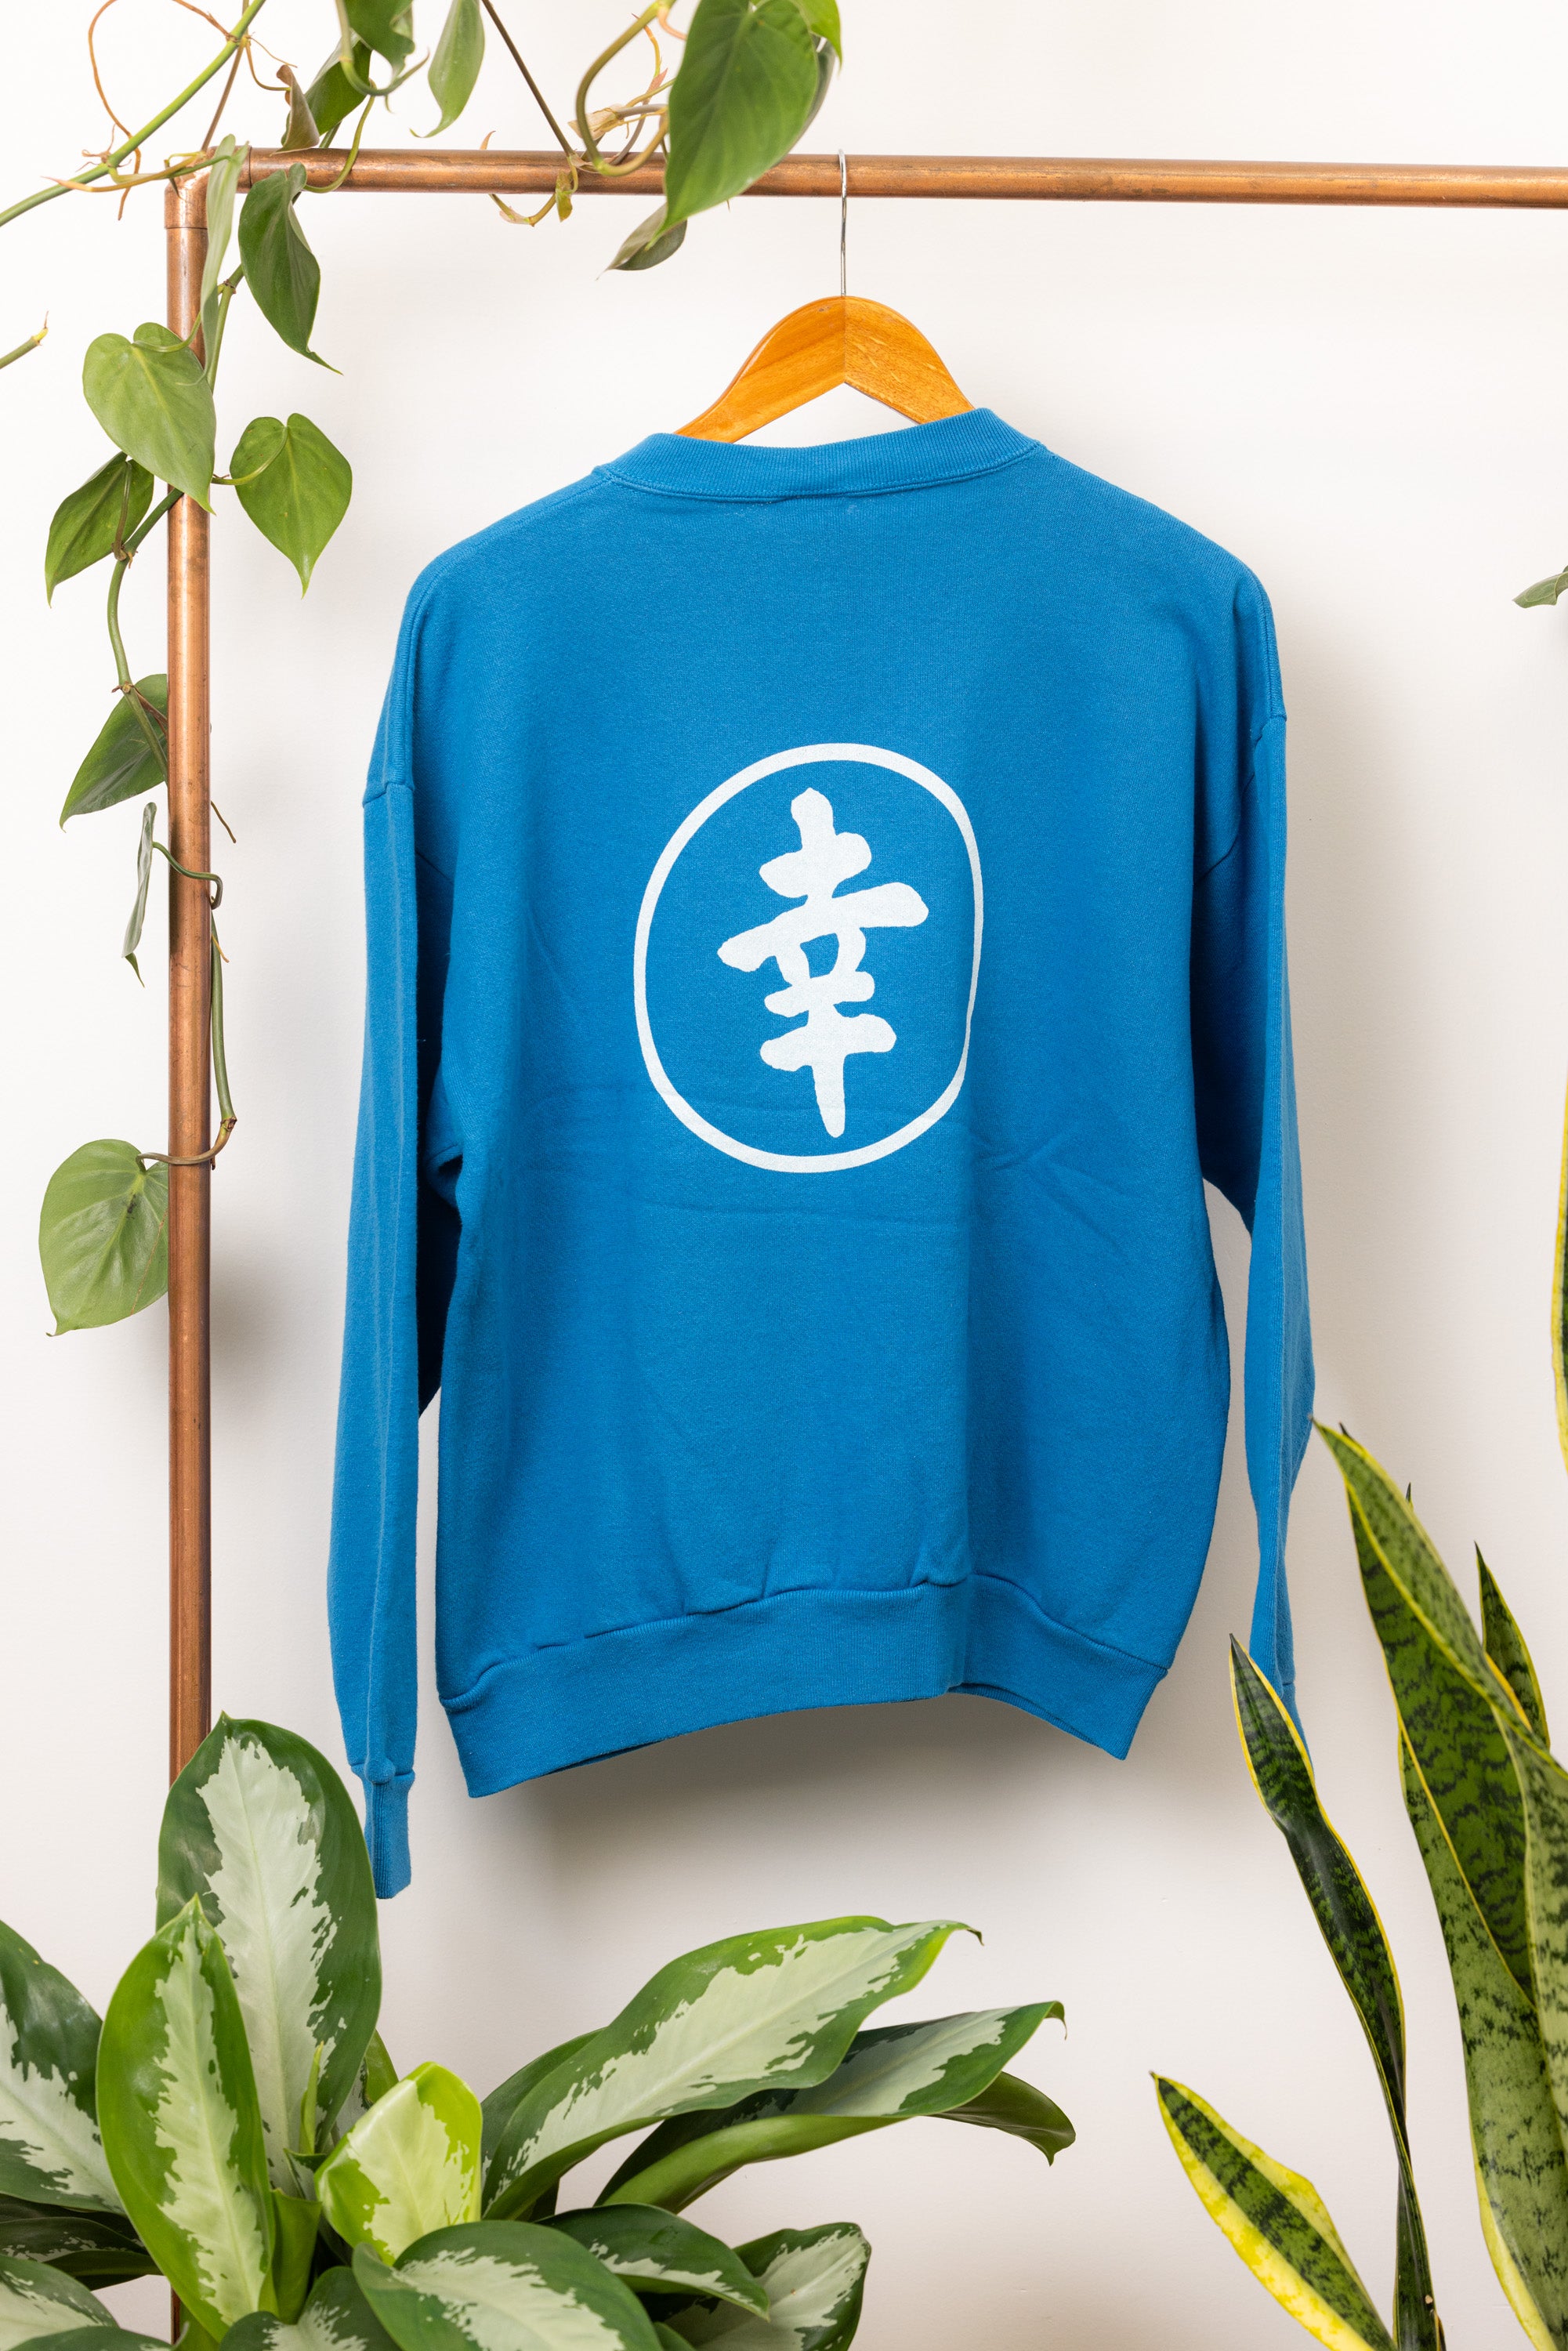 Blue SACHI.LA Vintage Crewneck Sweatshirt